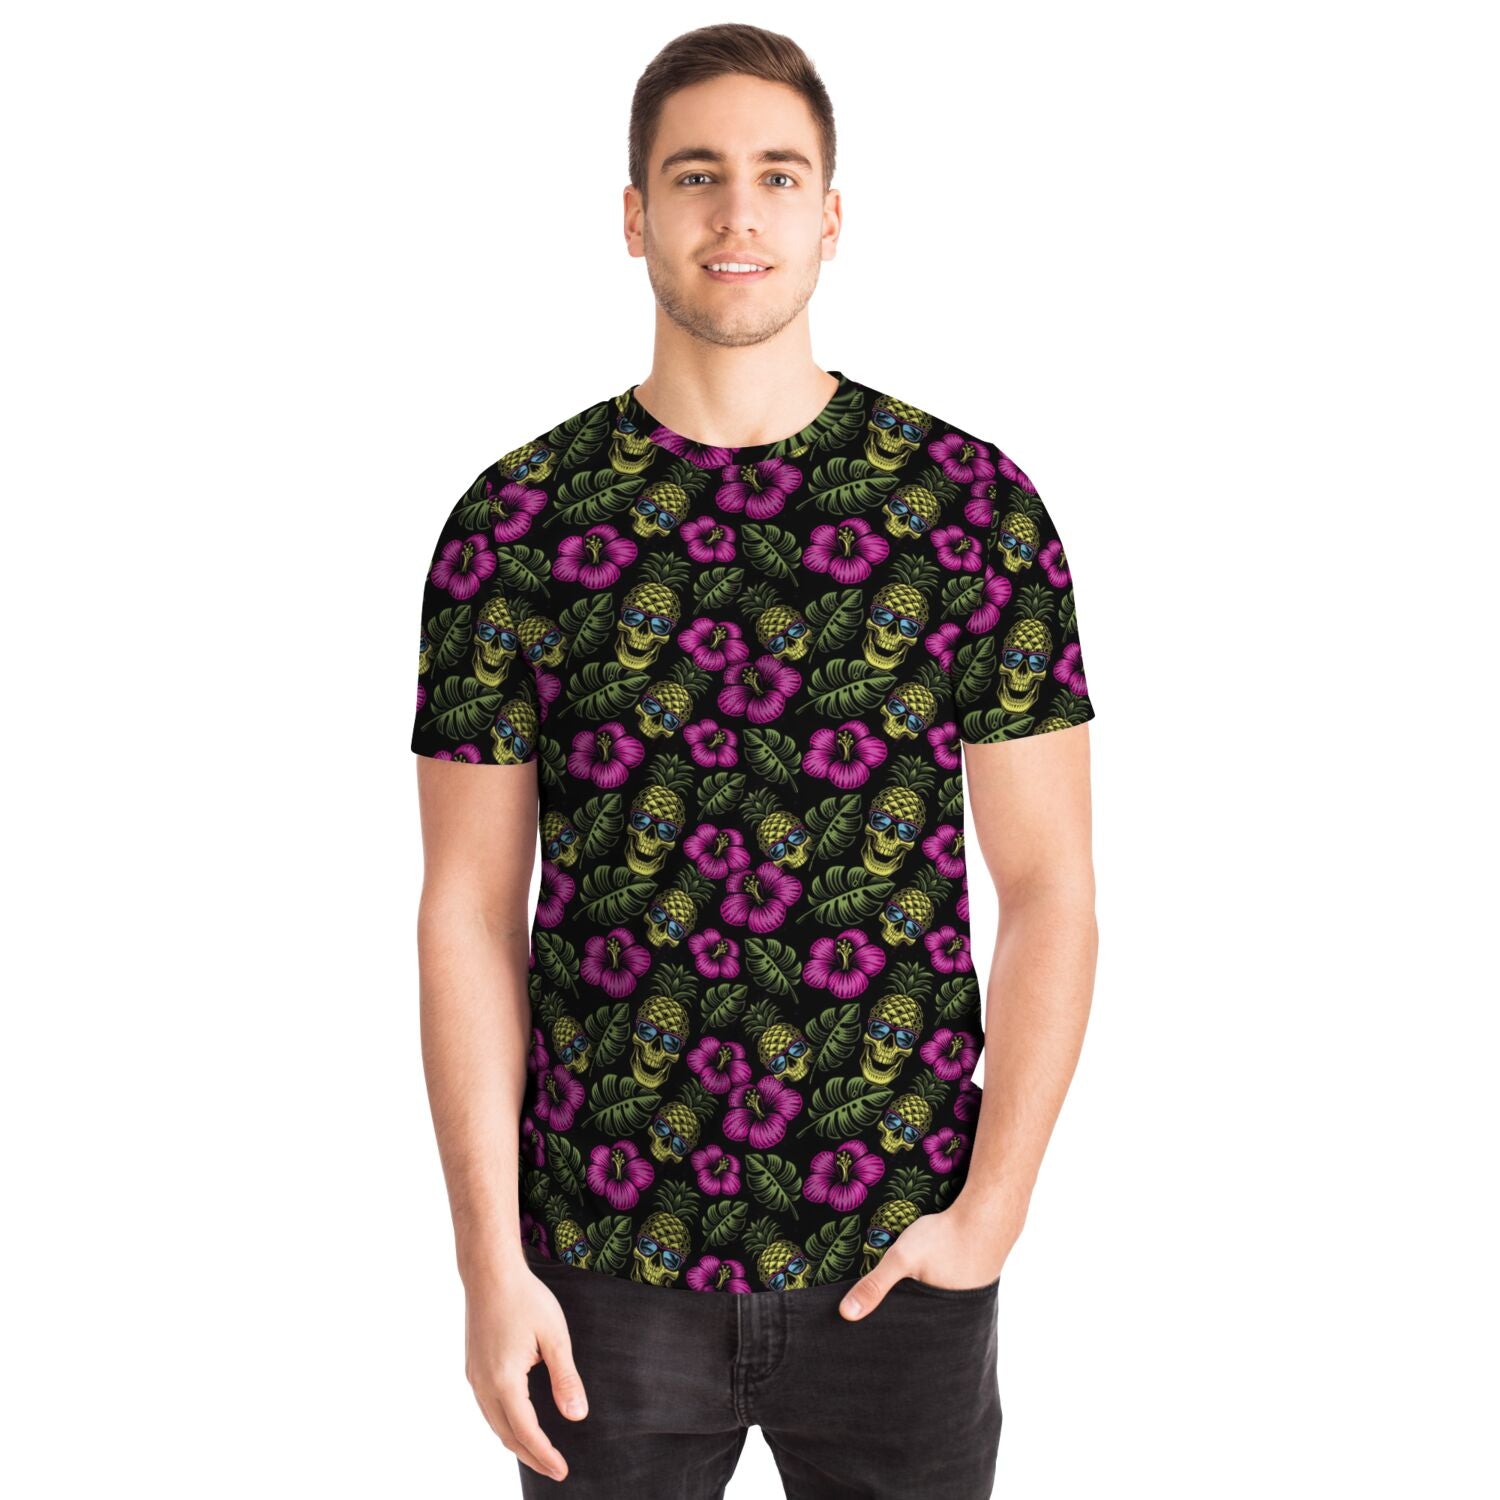 Rad Palm Pineapple Head T-Shirt